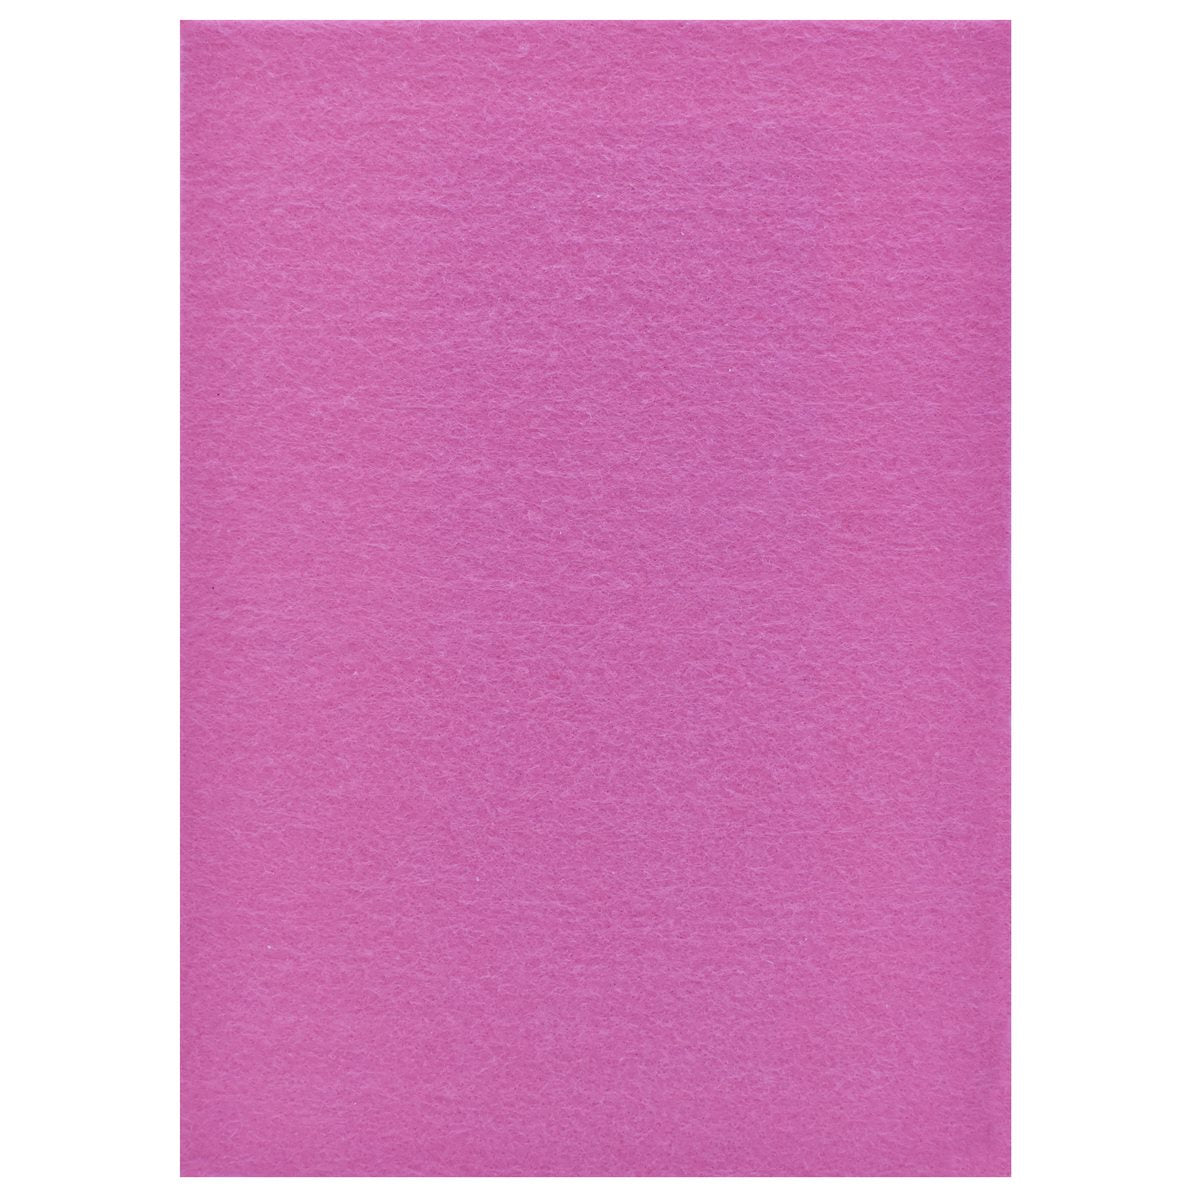 jags-mumbai Non-Woven & Felt Sheets A4 Nonwoven Felt Sheet 3 MM 1 Pcs Baby Pink